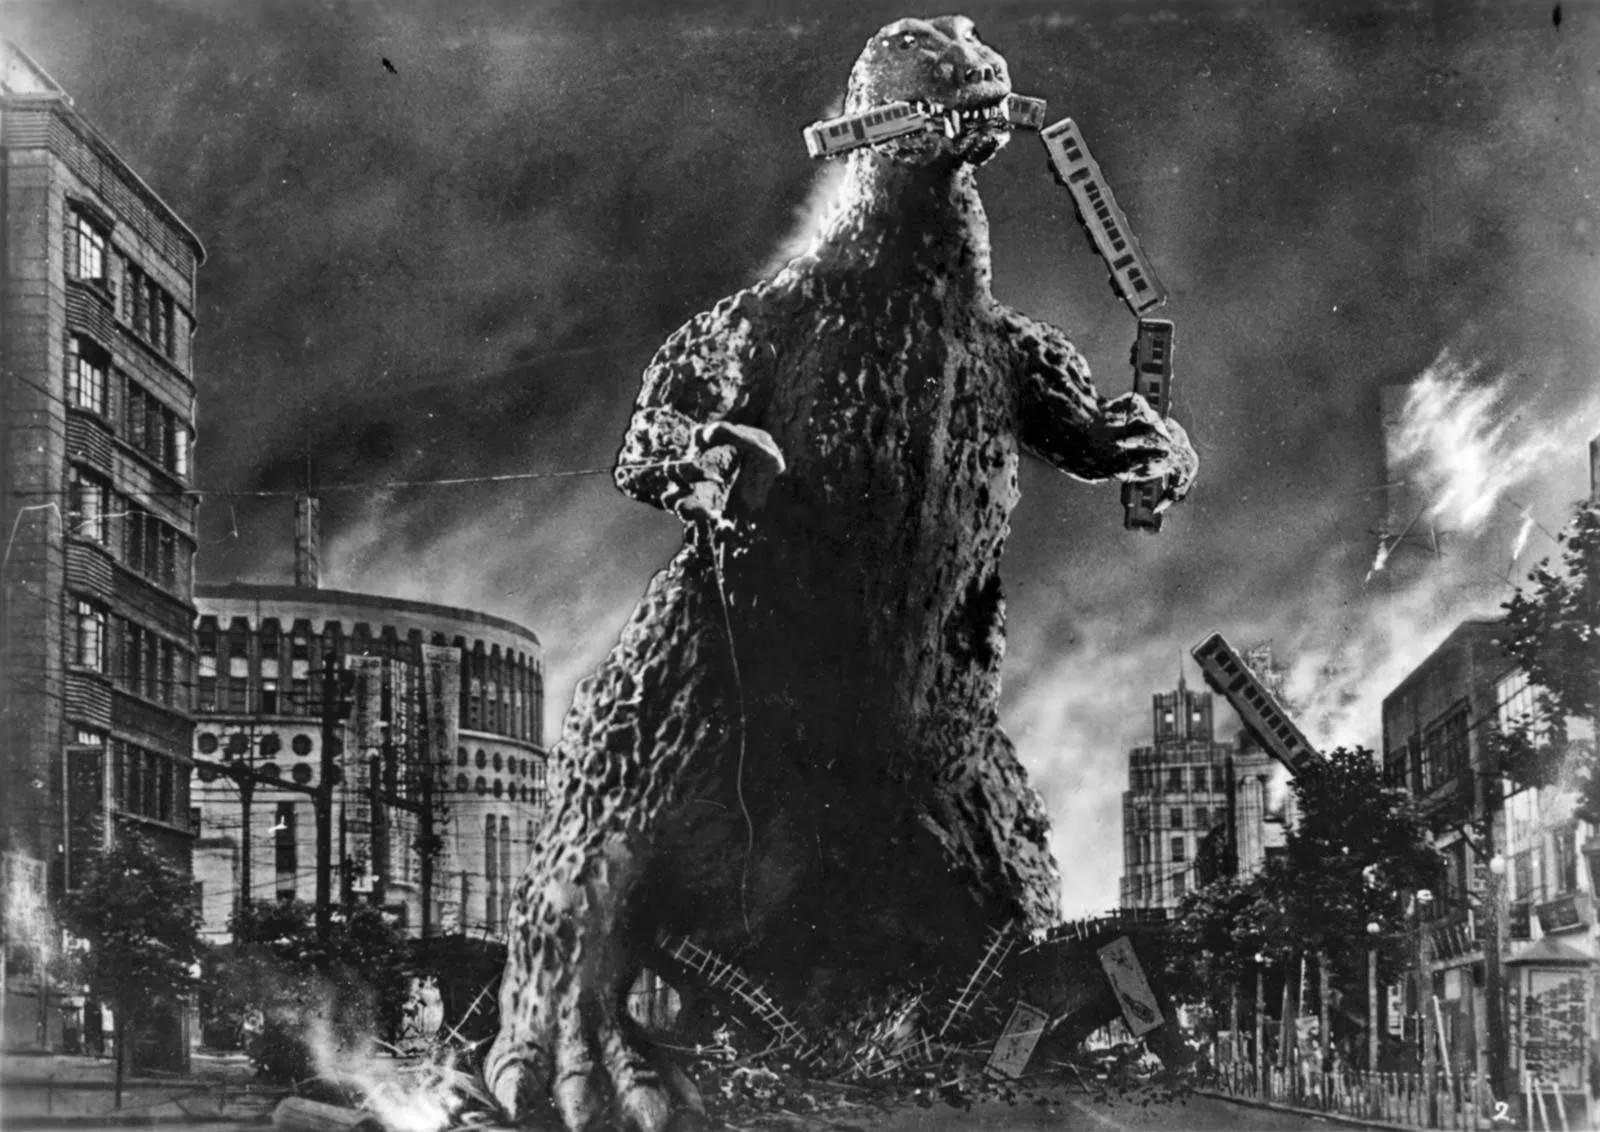 Godzilla (1954) eats a train